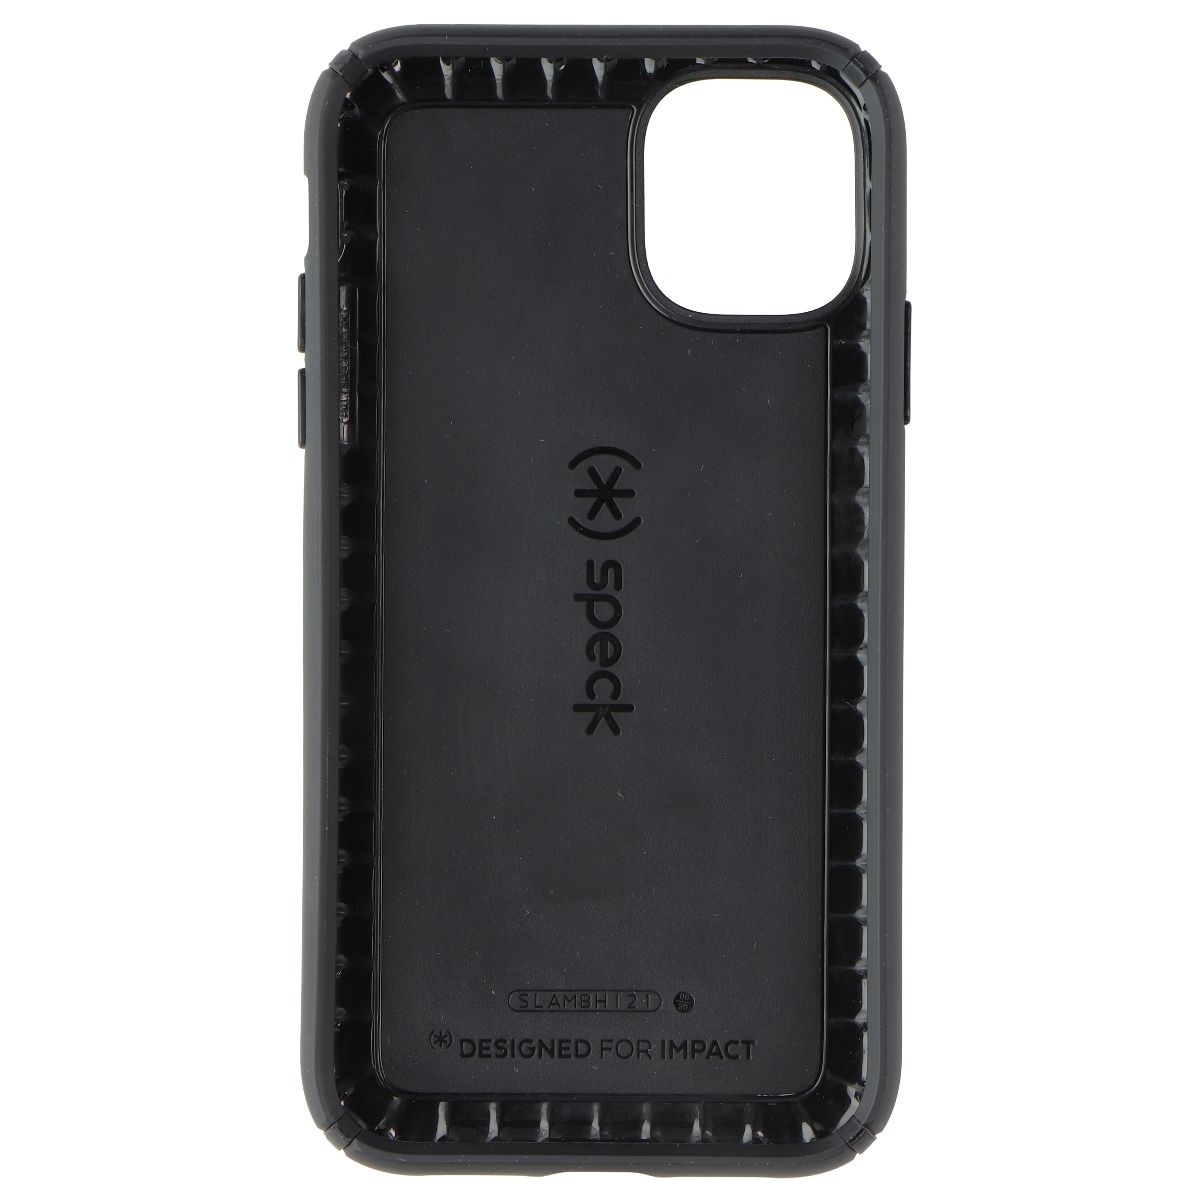 Speck Presidio2 Pro Series Hard Case For Apple IPhone 11 - Matte Black (Refurbished)